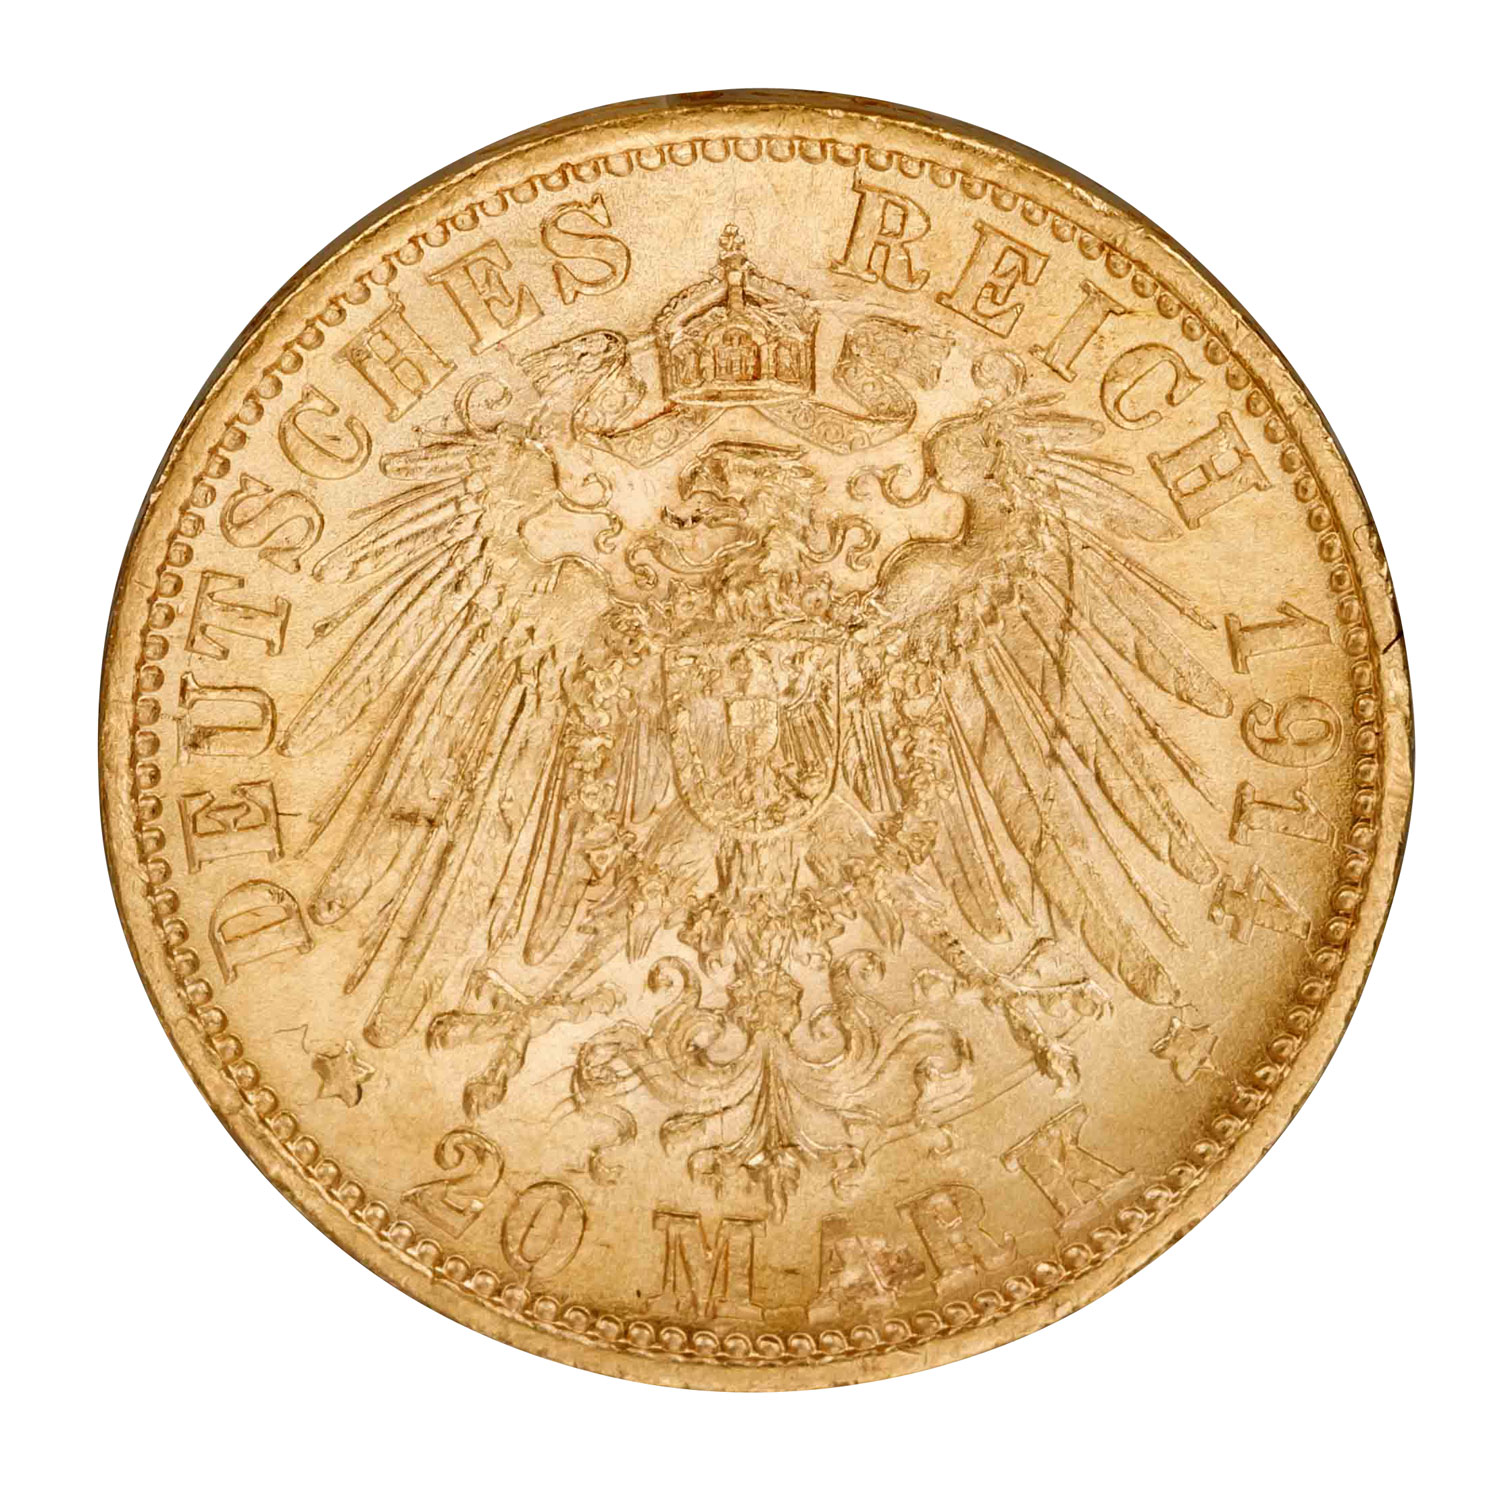 Königreich Württemberg/Gold - 20 Mark 1914/F, König Wilhelm II., - Image 2 of 3